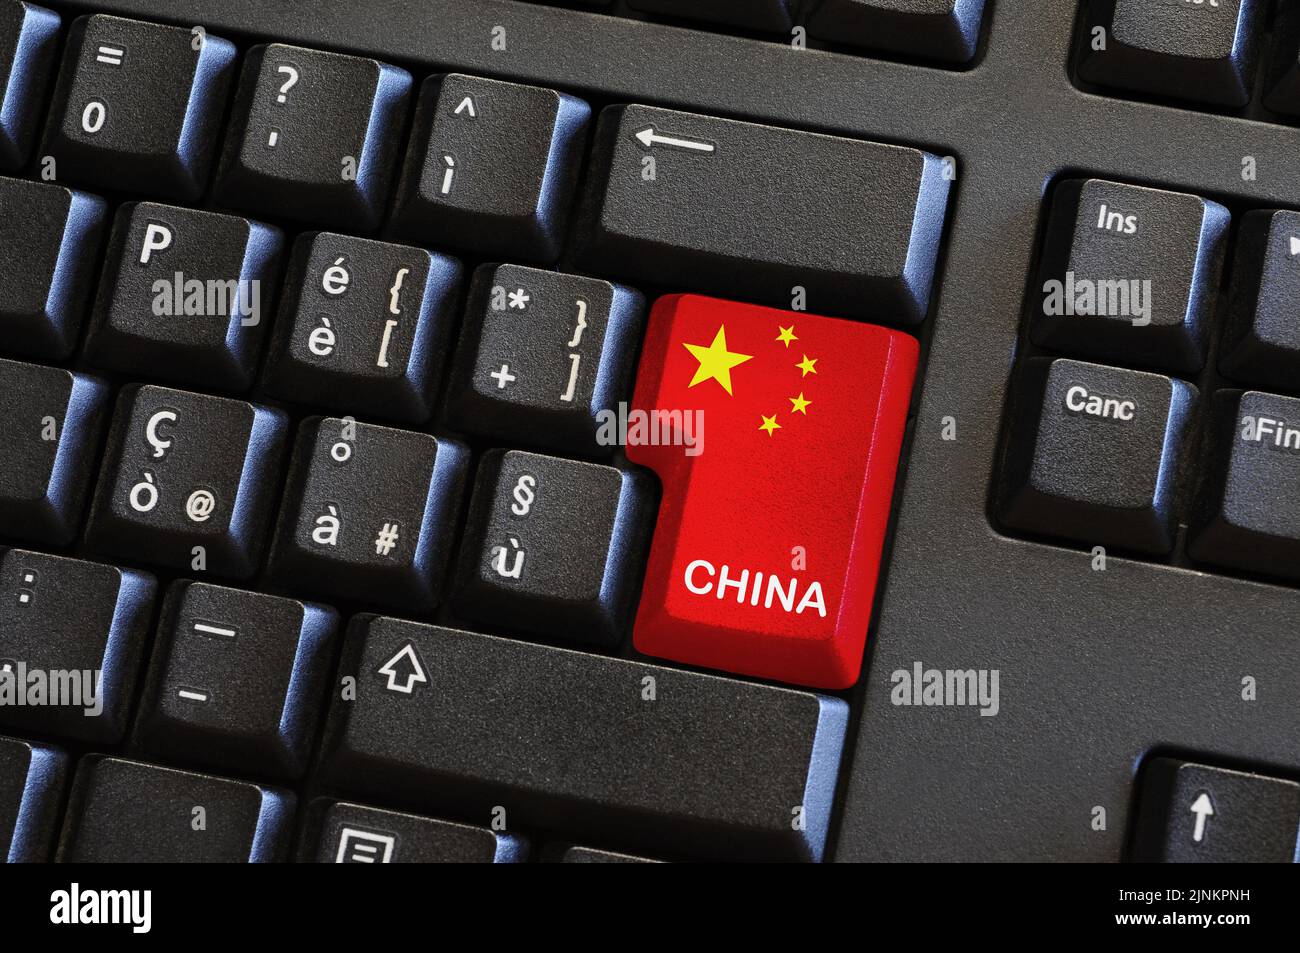 Computer Keyboard Key with China Flag and text 'CHINA' Stock Photo